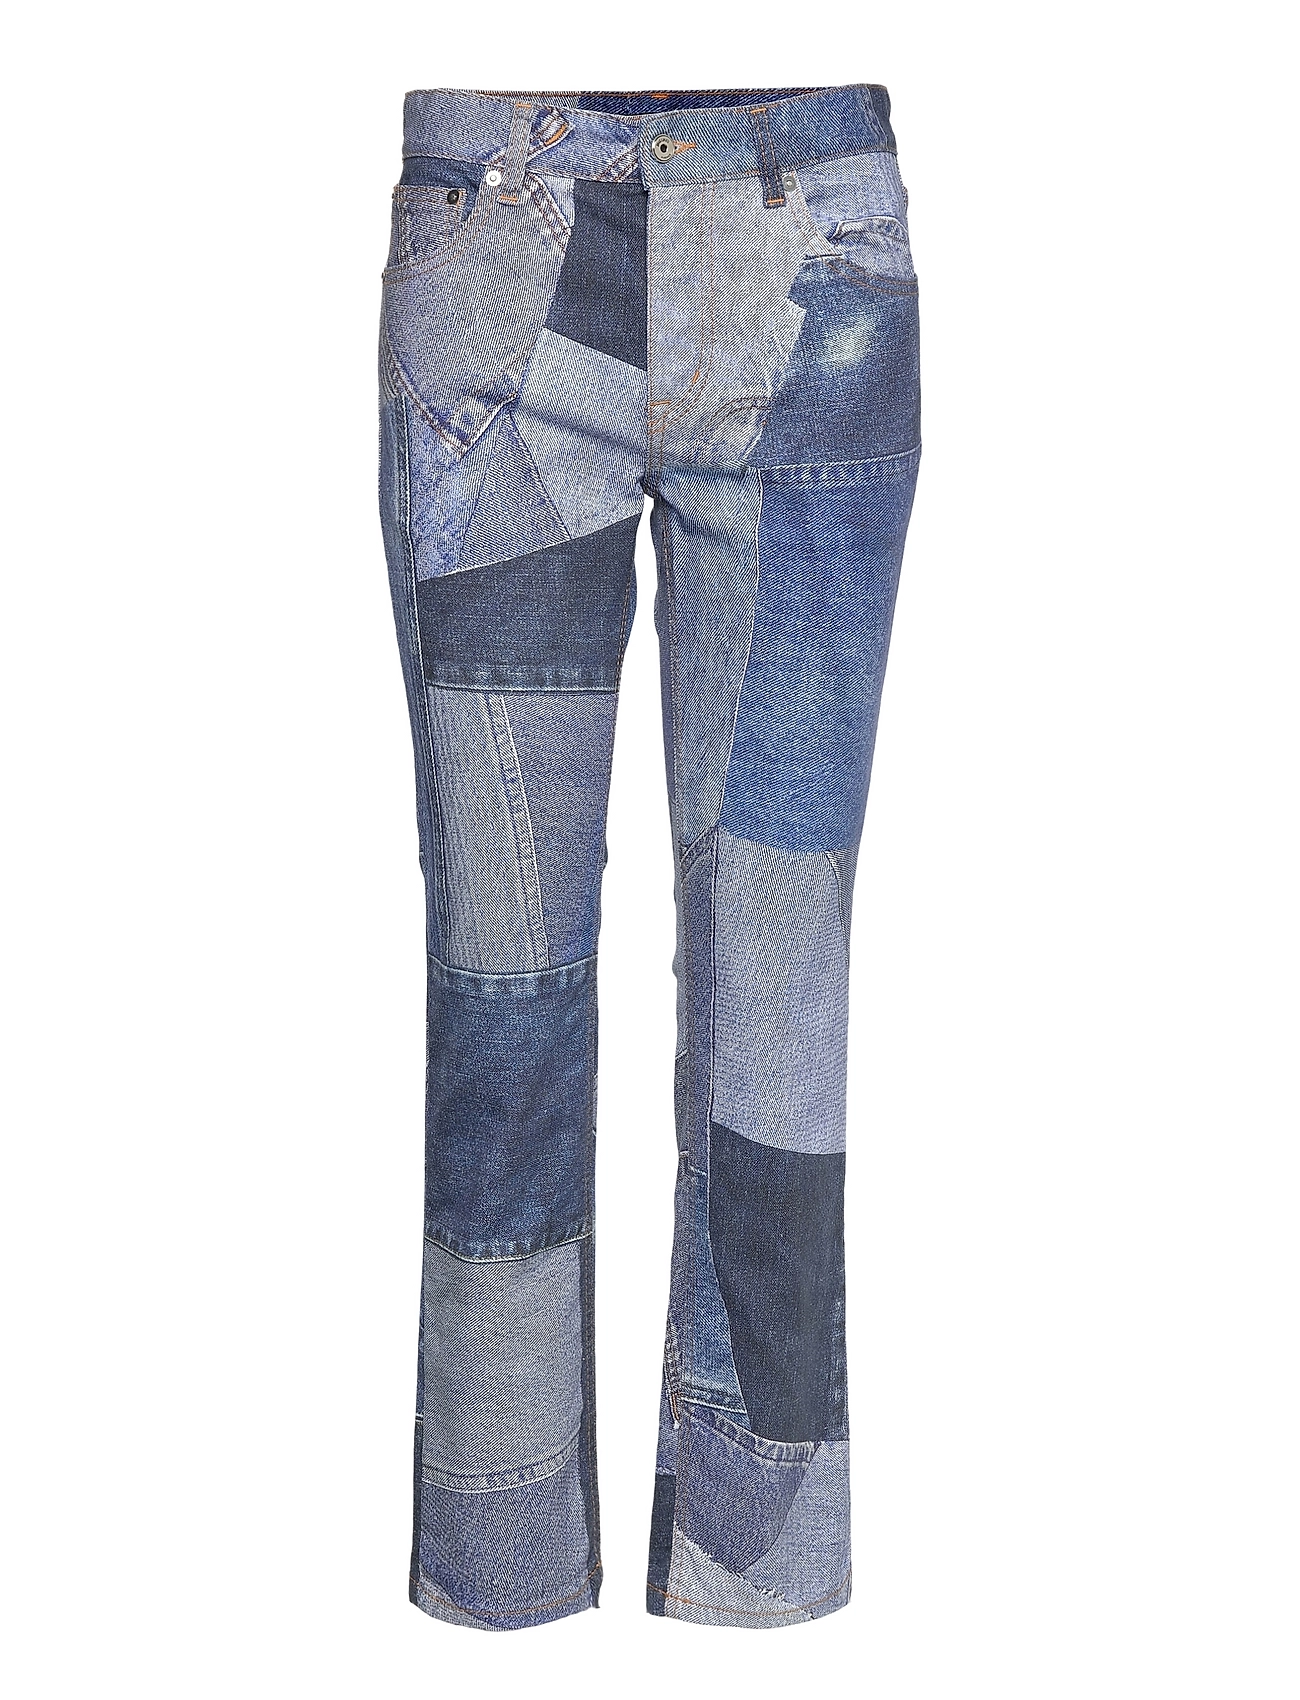 Pants 5 Pockets Bottoms Jeans Straight-regular Blue Just Cavalli